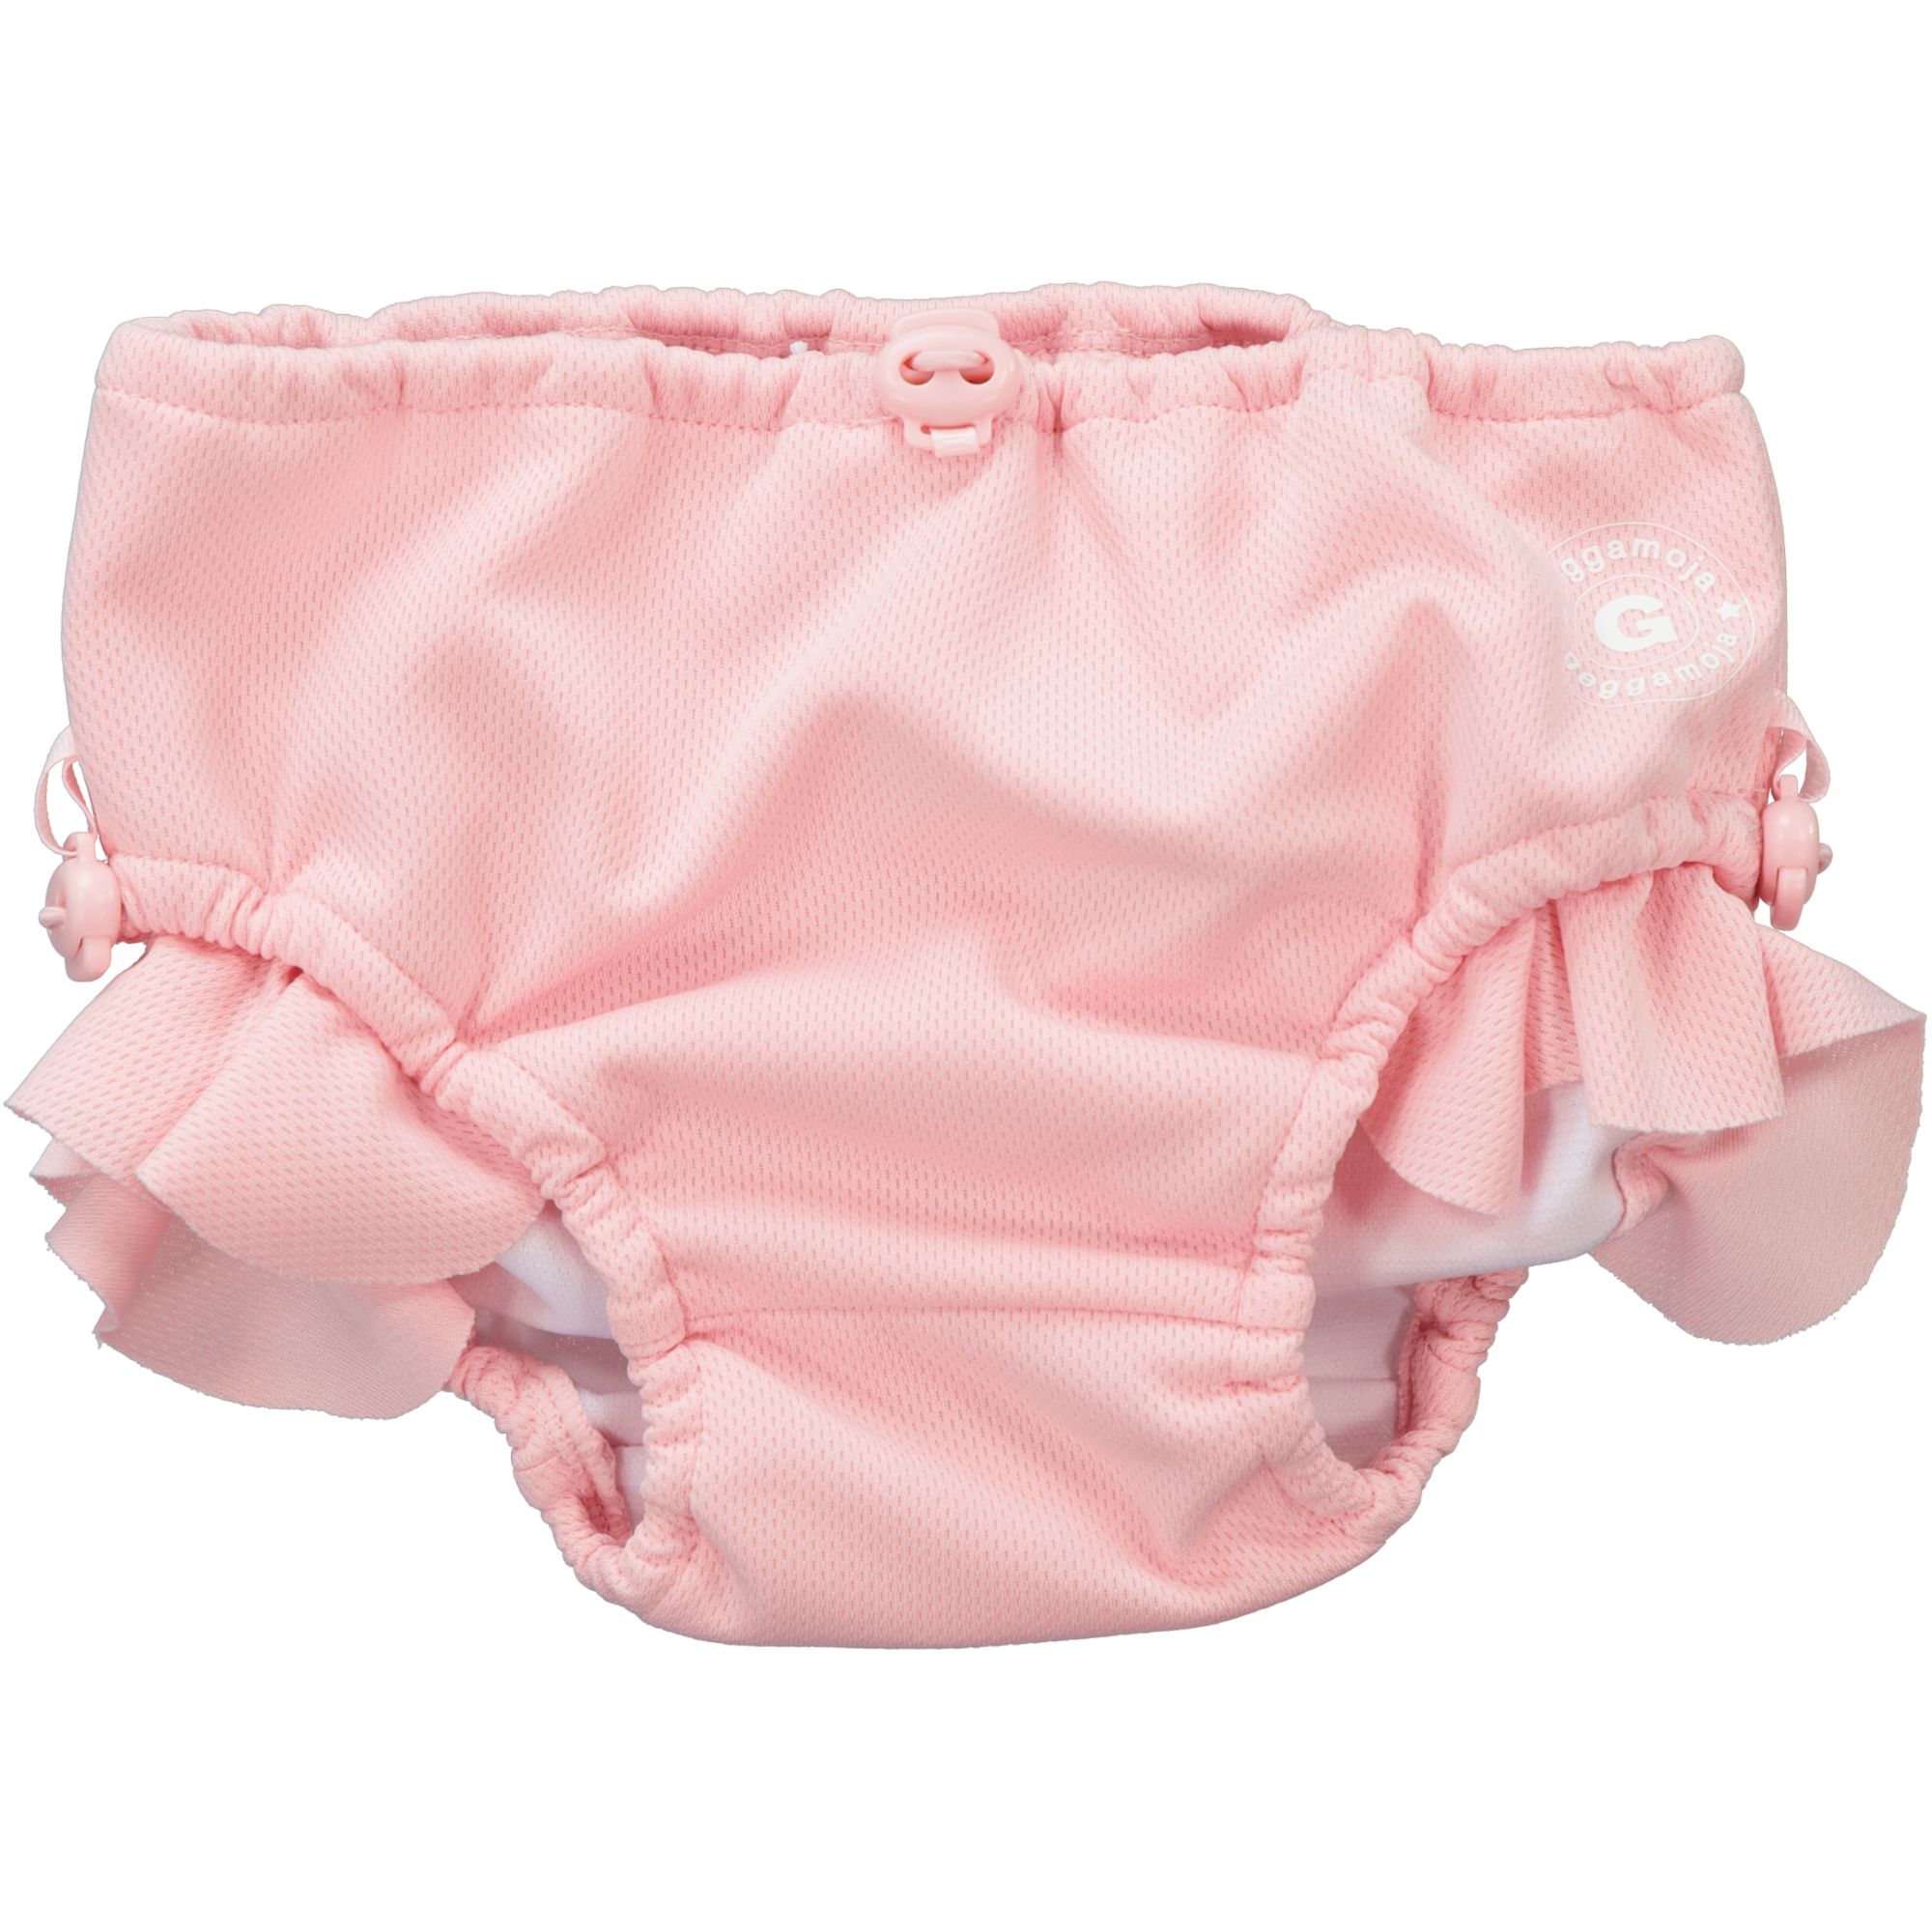 UV Baby swim pant Pink